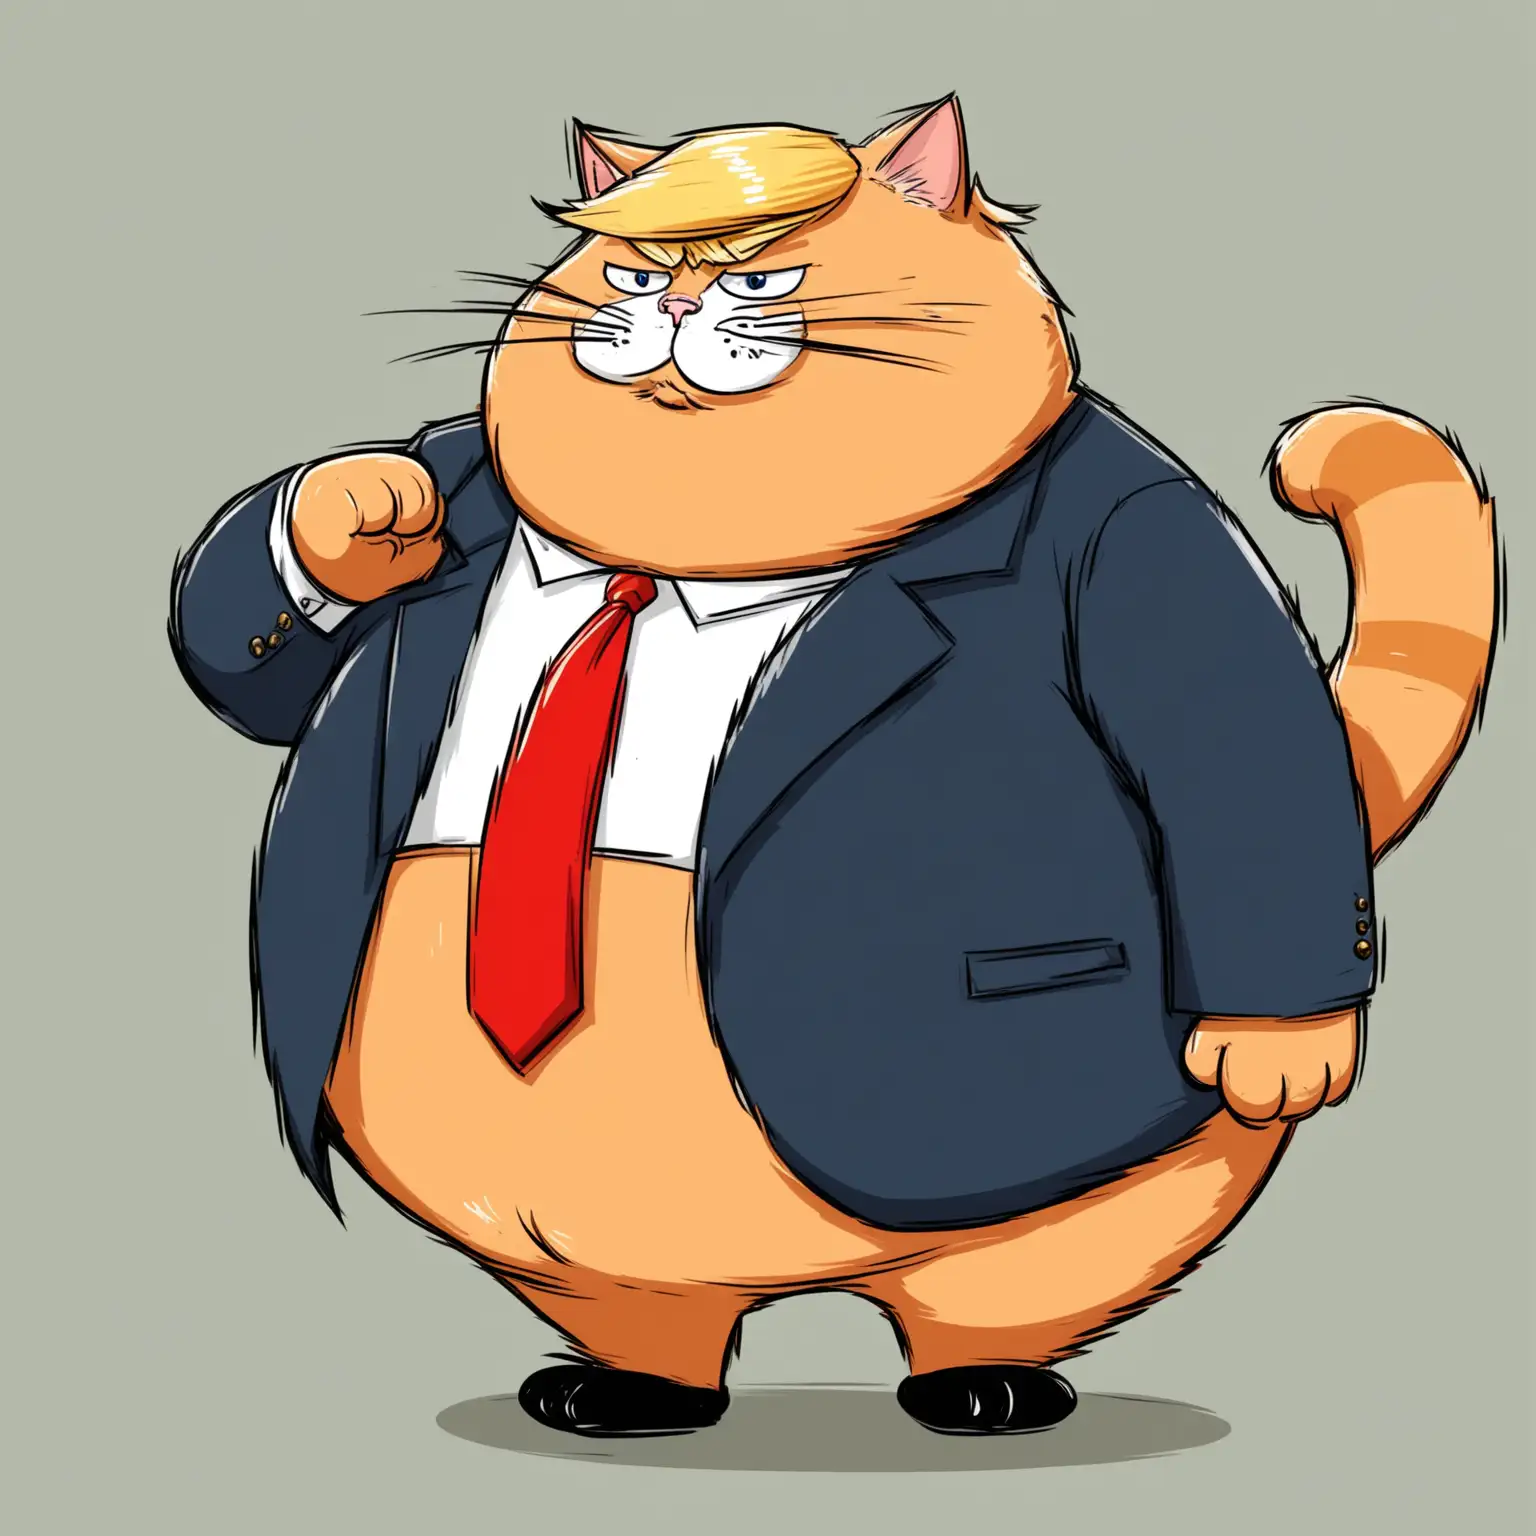 Funny Cartoon Illustration of a Plump Cat Mimicking Trump in 2D Art